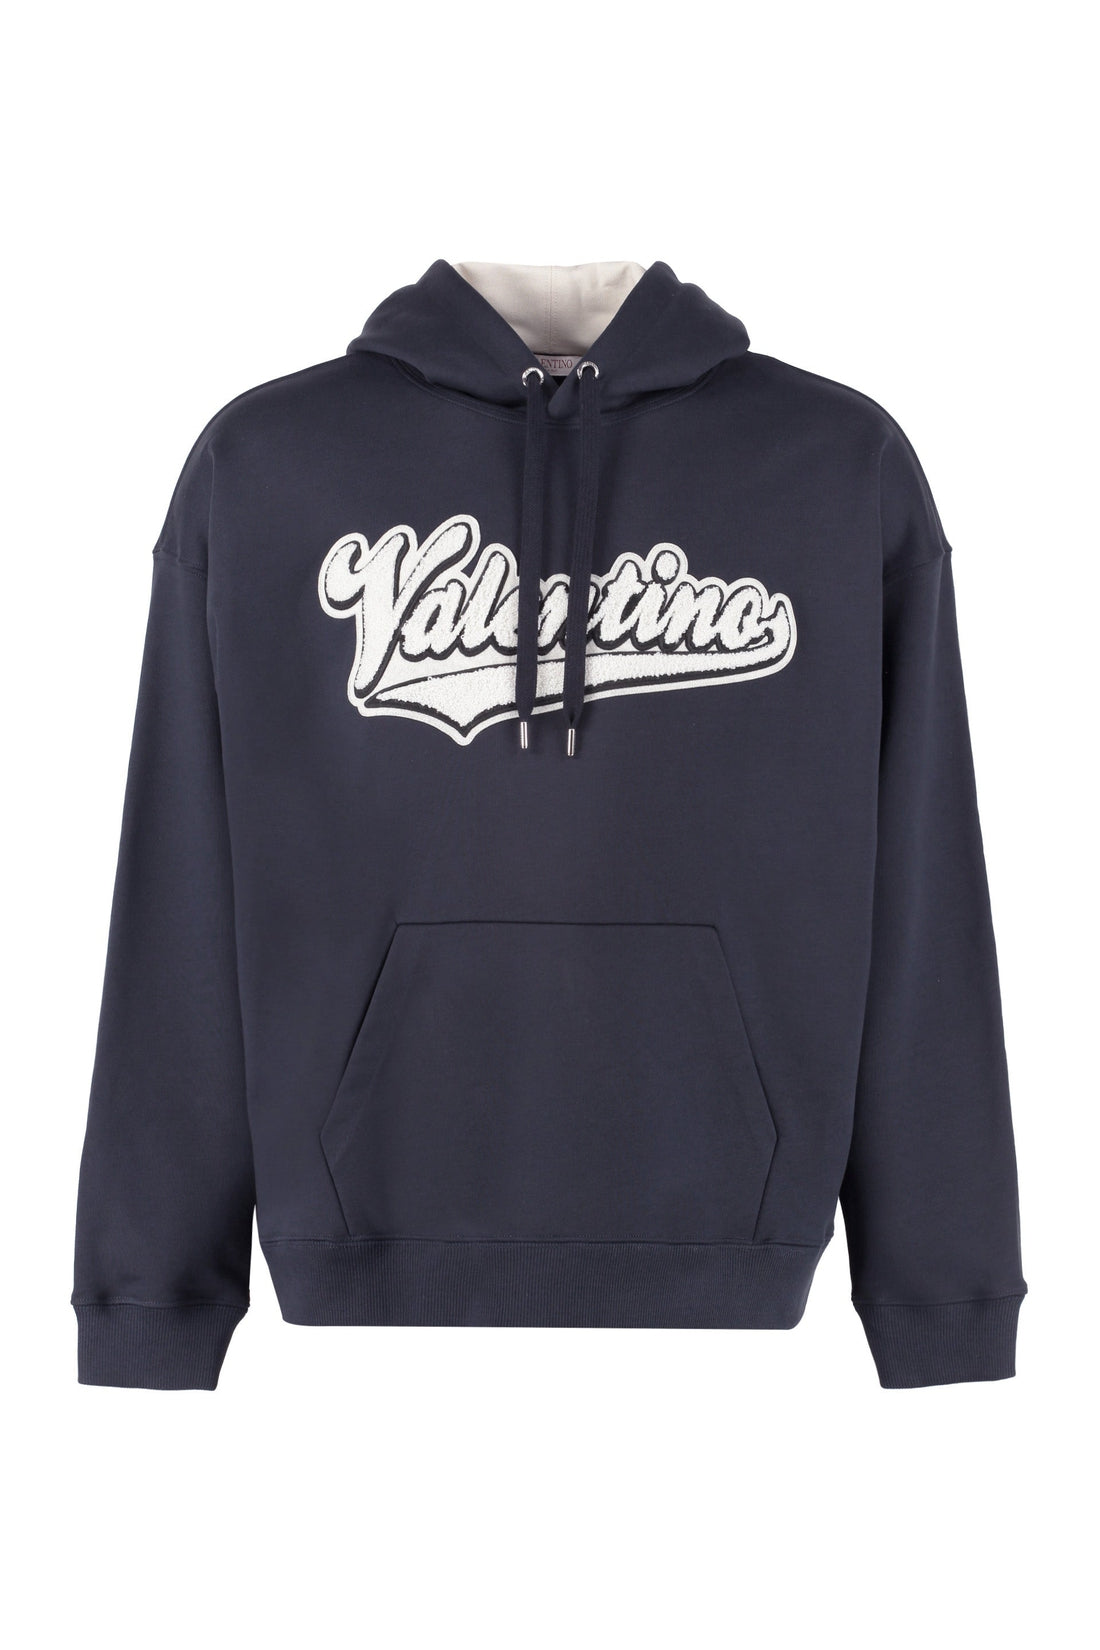 Valentino-OUTLET-SALE-Logo cotton hoodie-ARCHIVIST